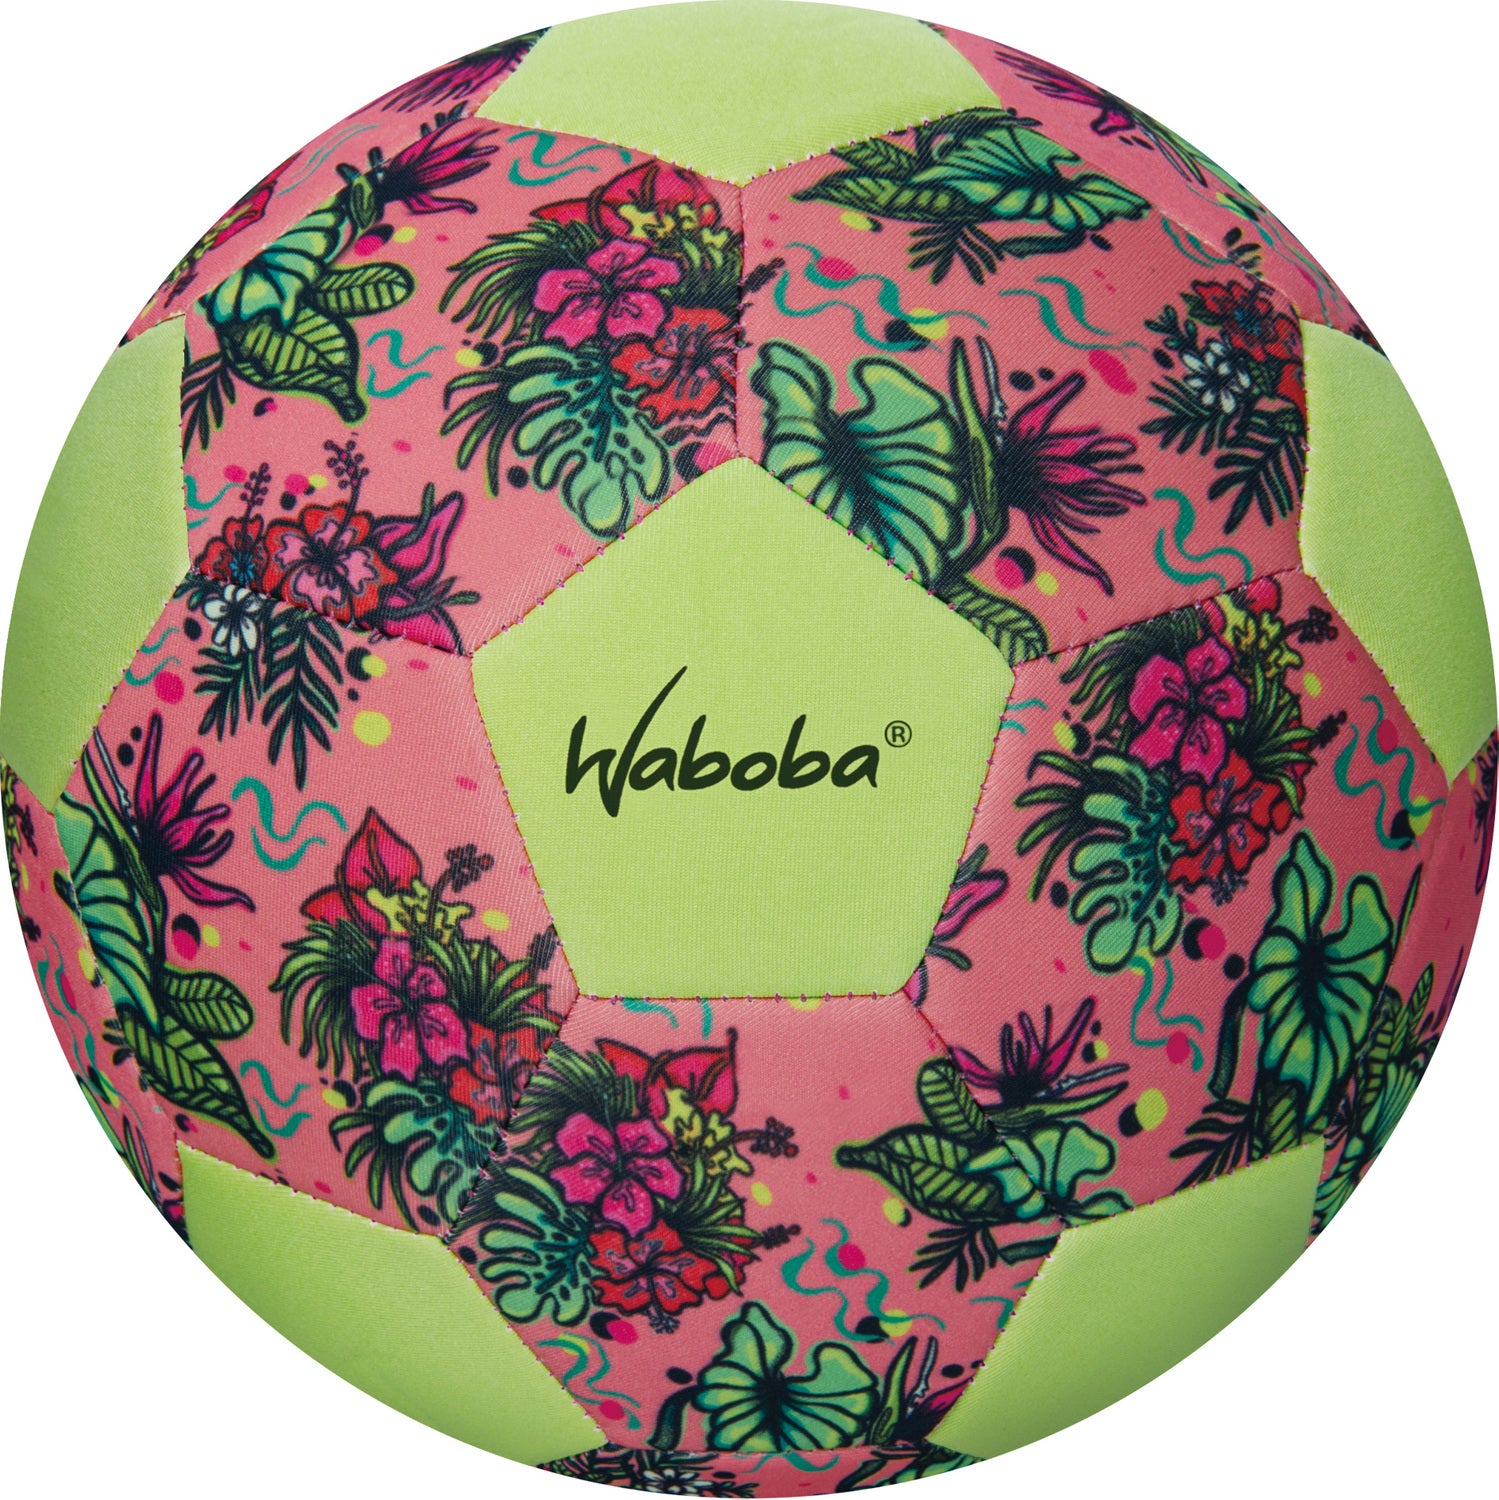 Tropical Beach Soccer Ball (assorted colors)